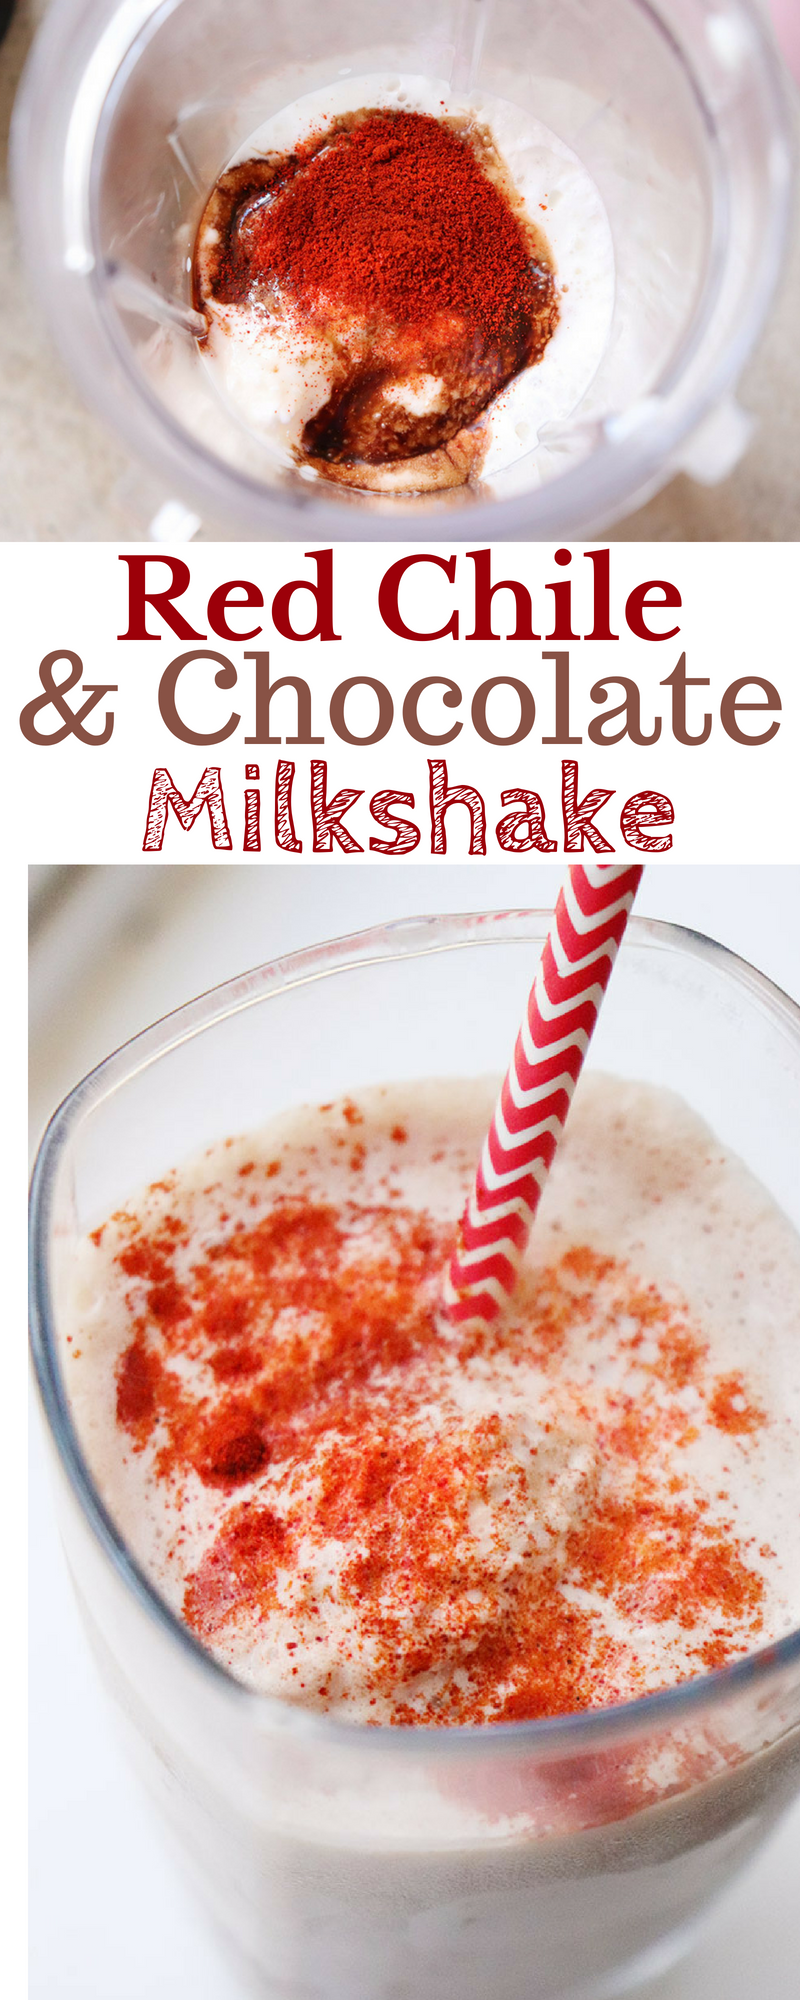 Chocolate and Red Chile Milkshake | NewMexicanFoodie.com